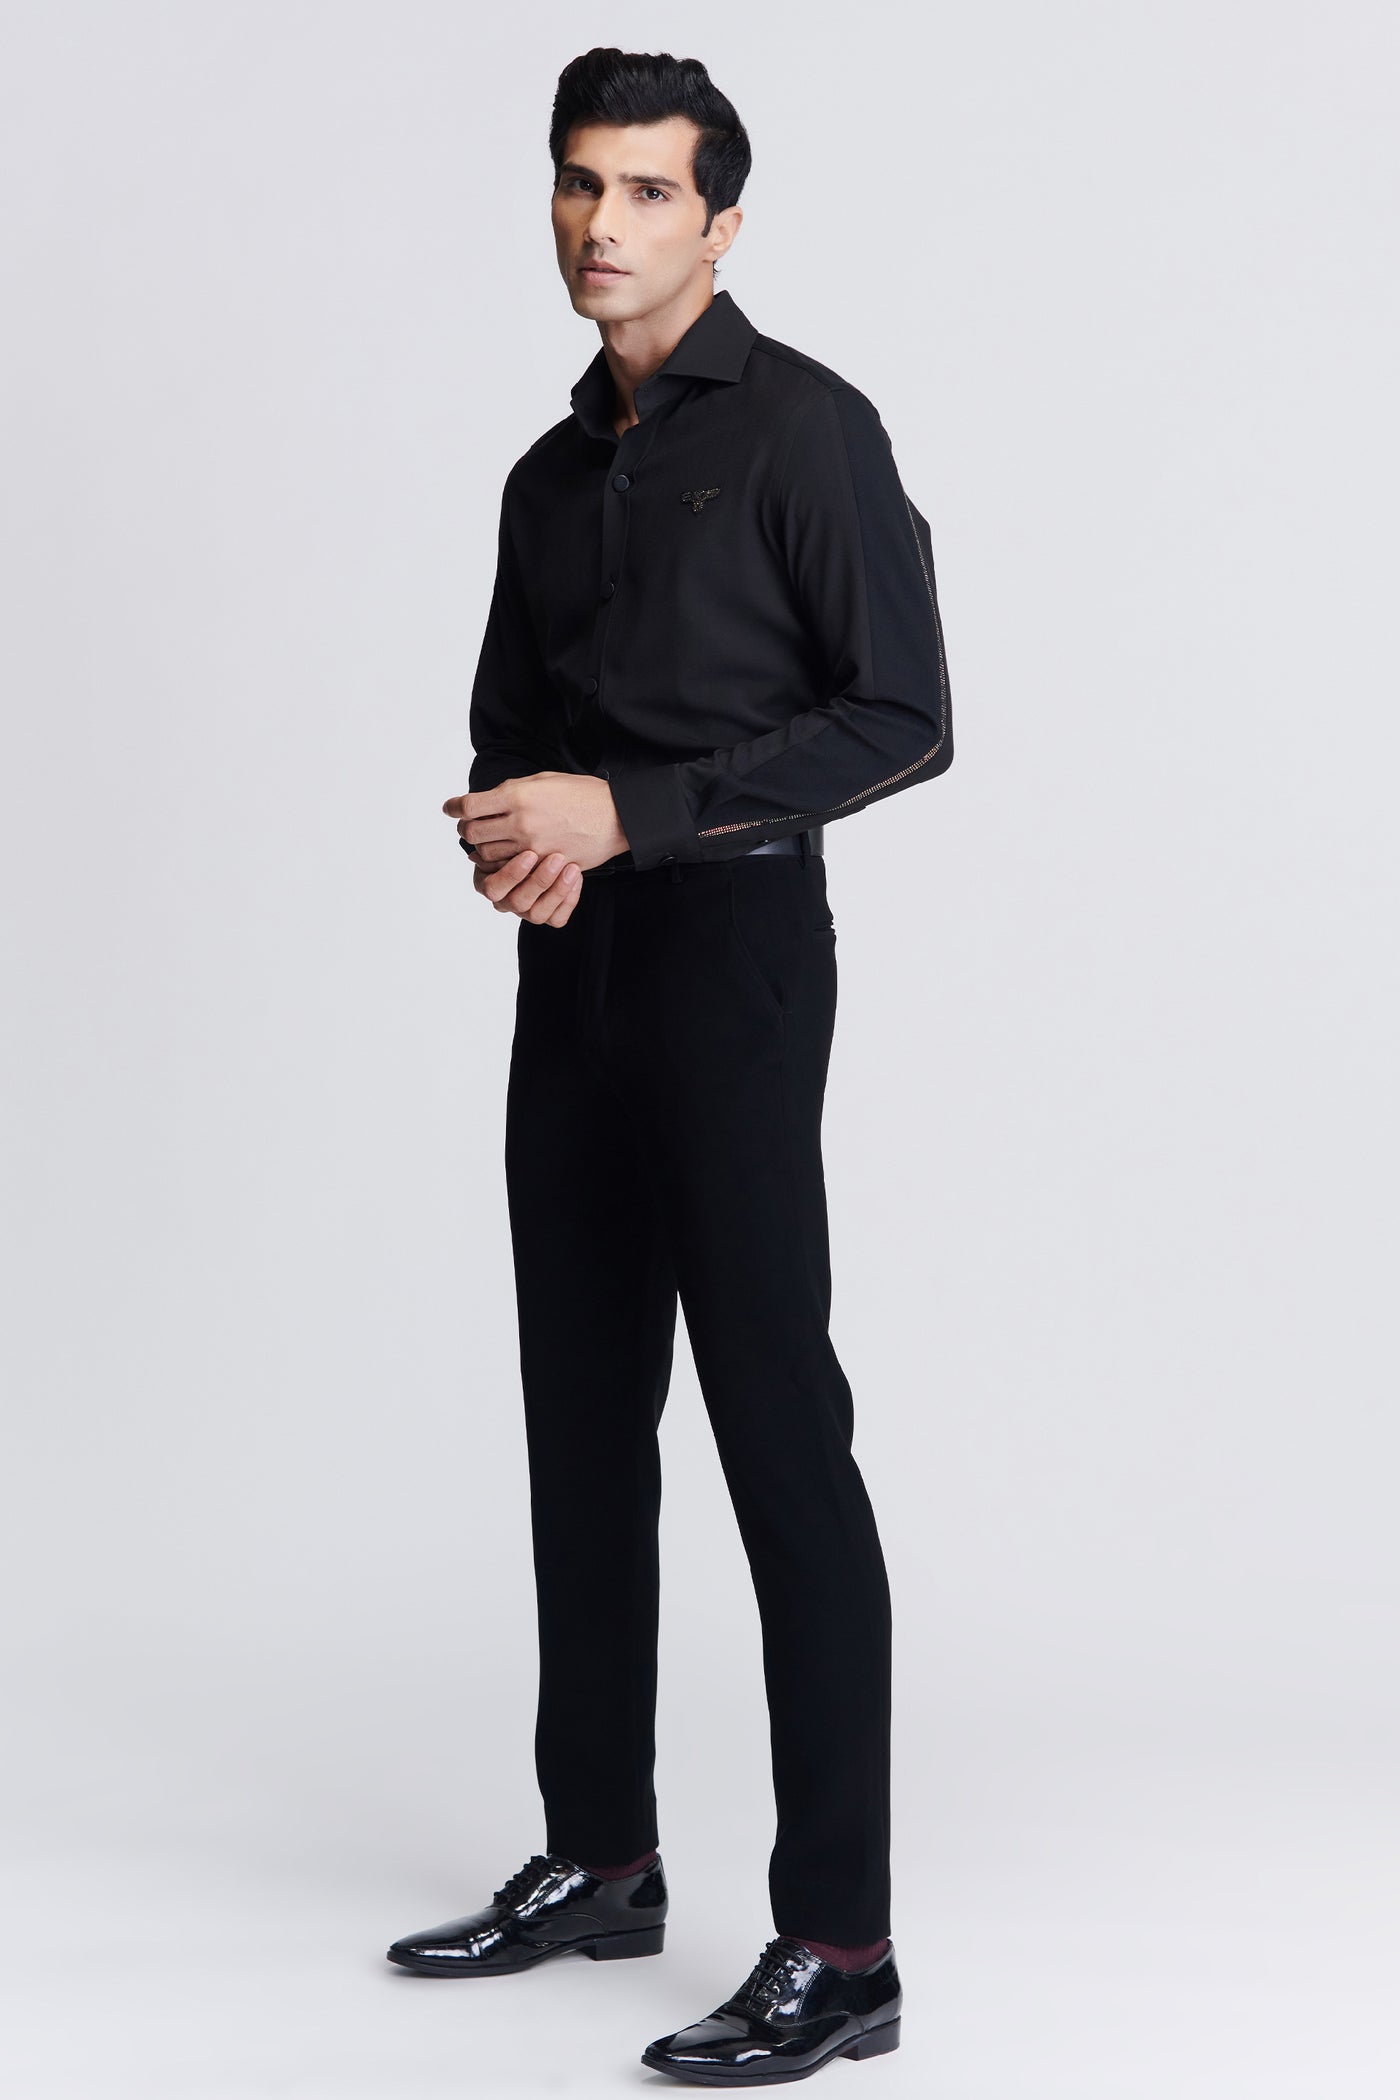 Shantanu & Nikhil Menswear Black Crested Shirt indian designer wear online shopping melange singapore